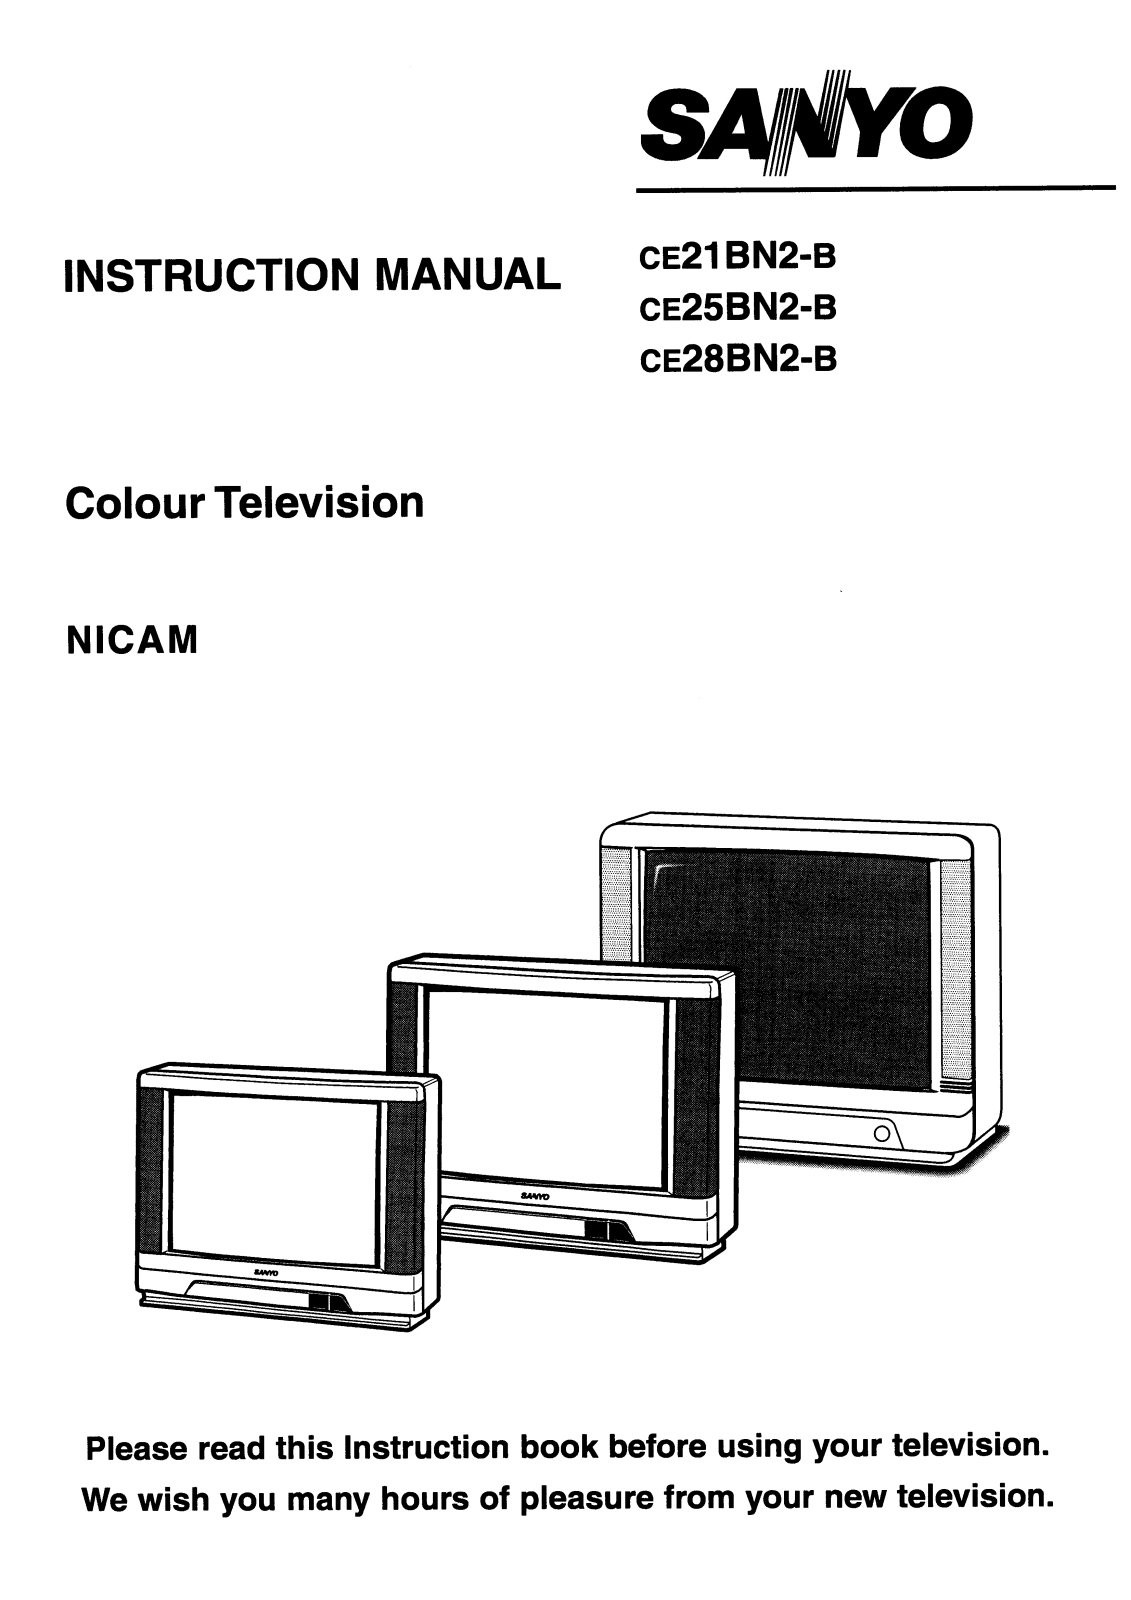 Sanyo CE28BN2-B, CE25BN2-B Instruction Manual